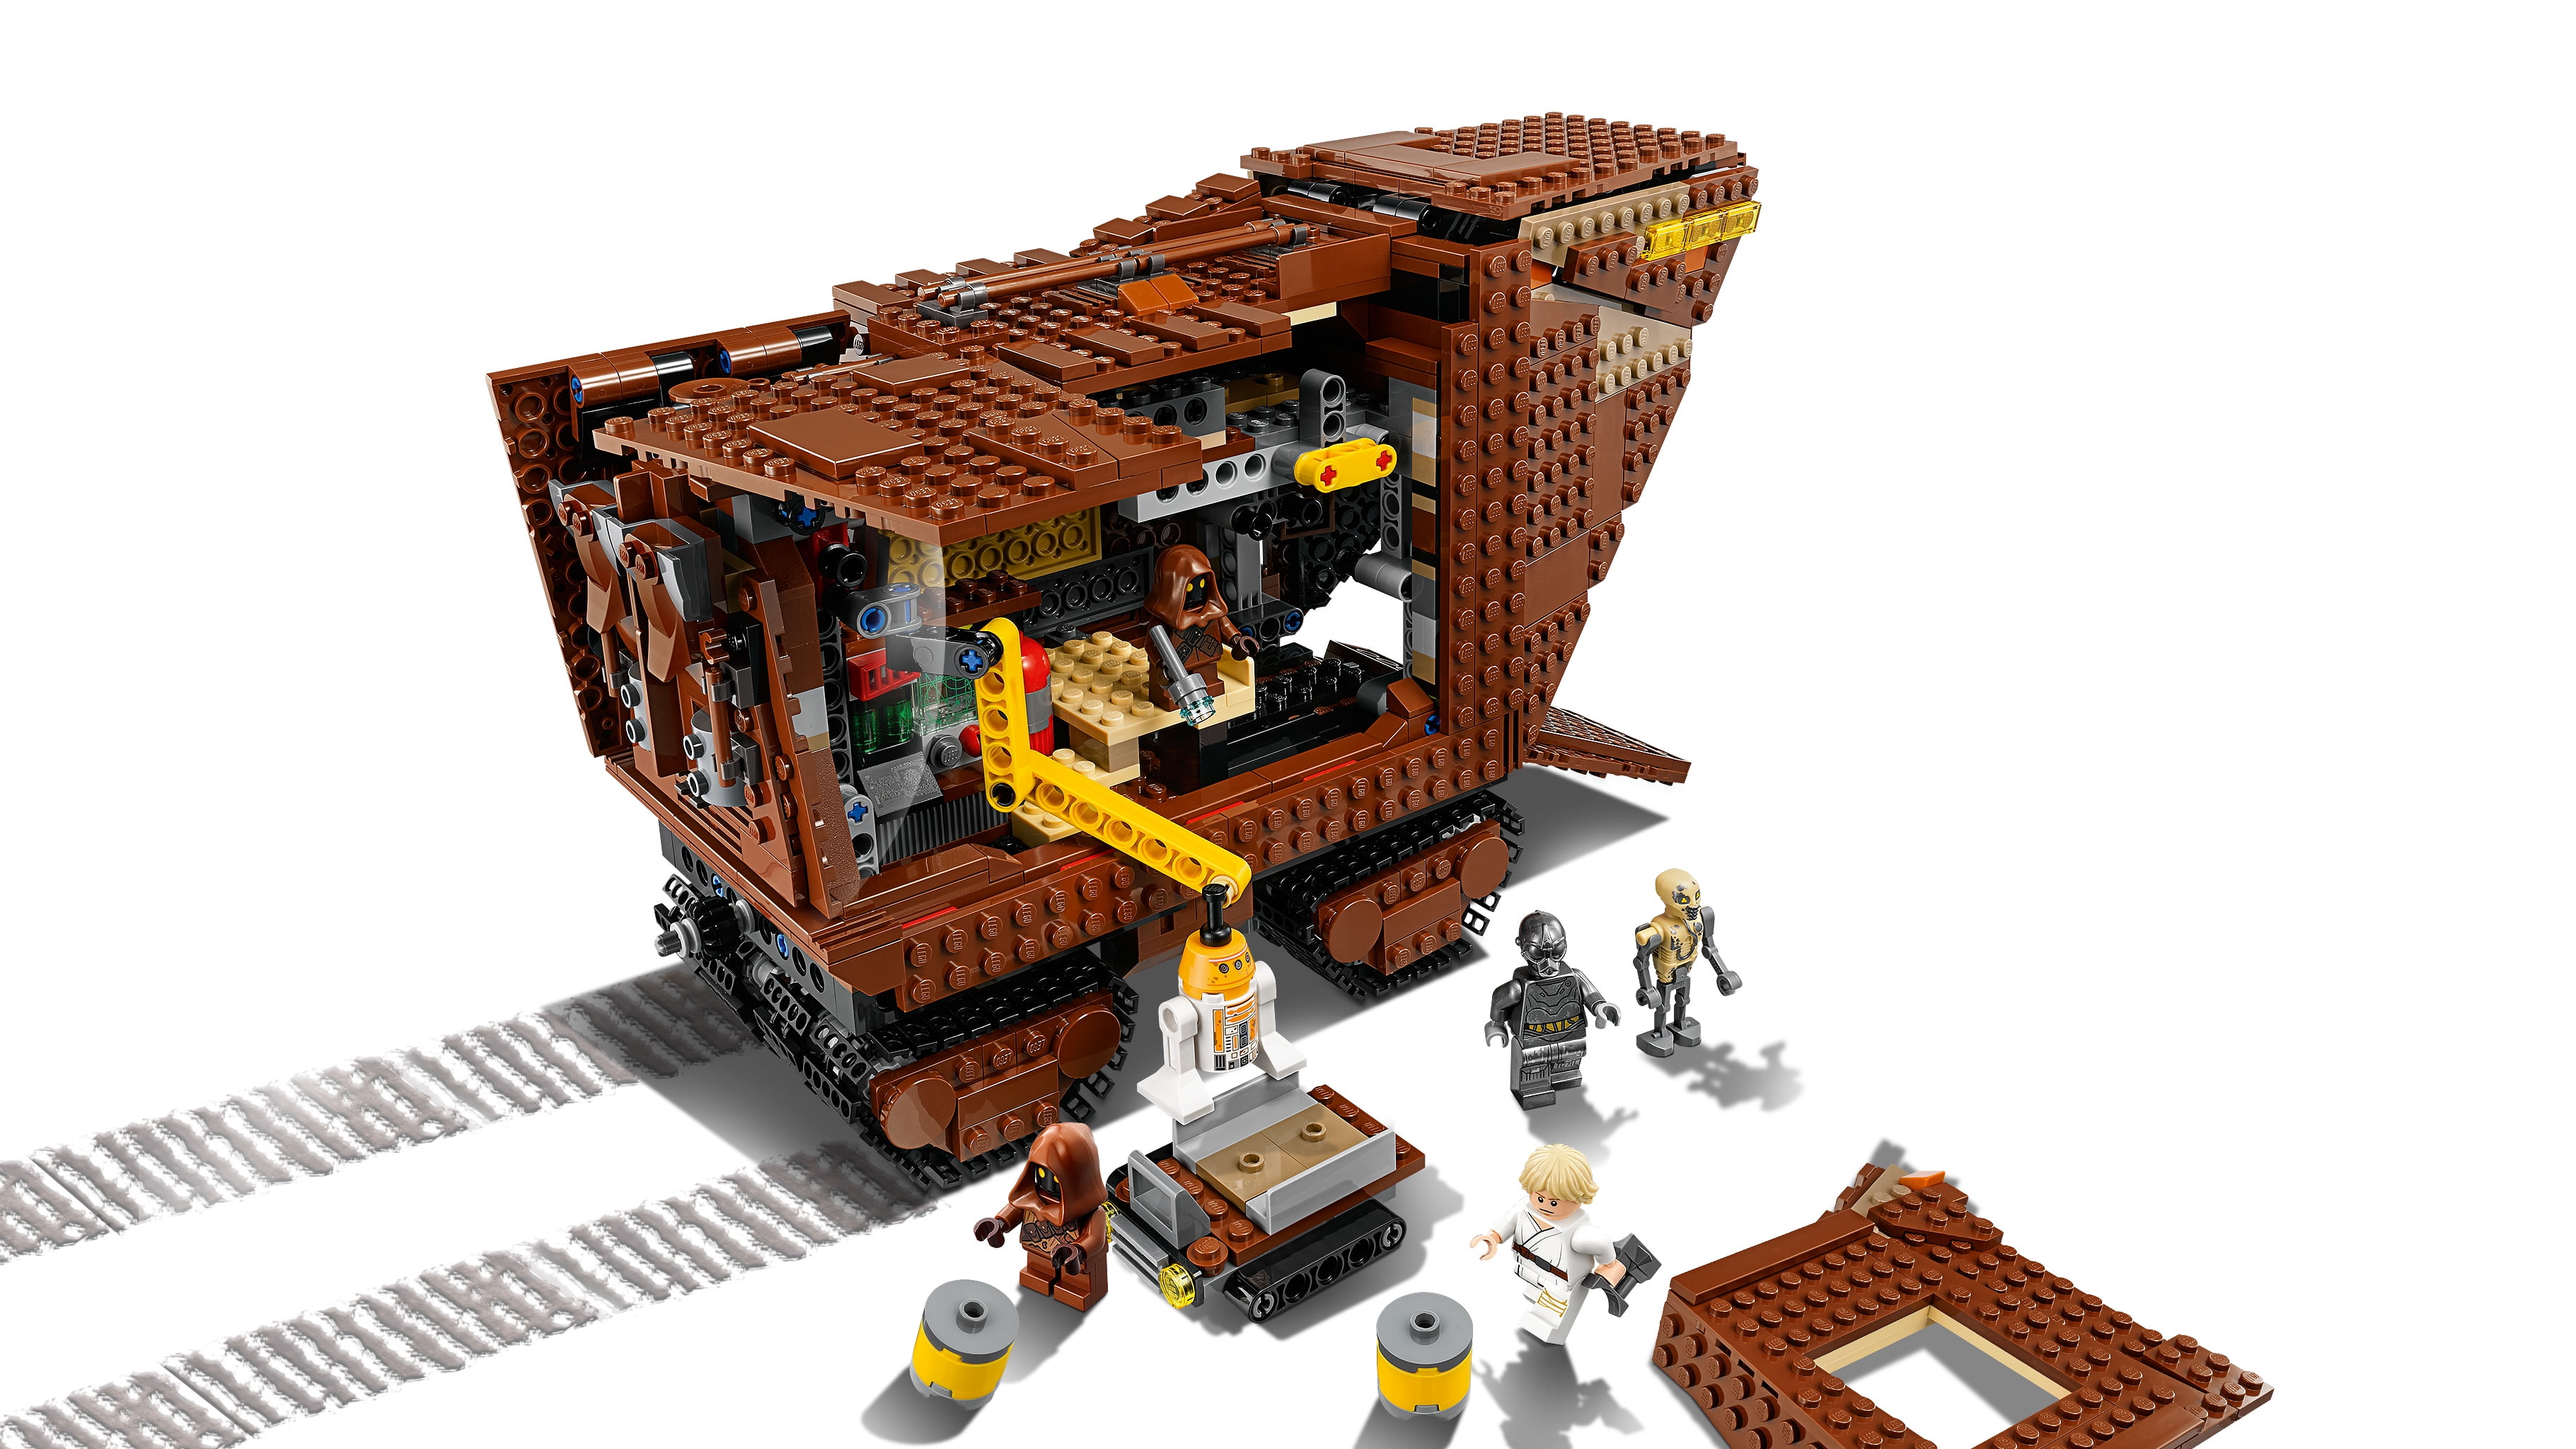 LEGO Star Wars Sandcrawler 75220 Building Set (1,239 Pieces)